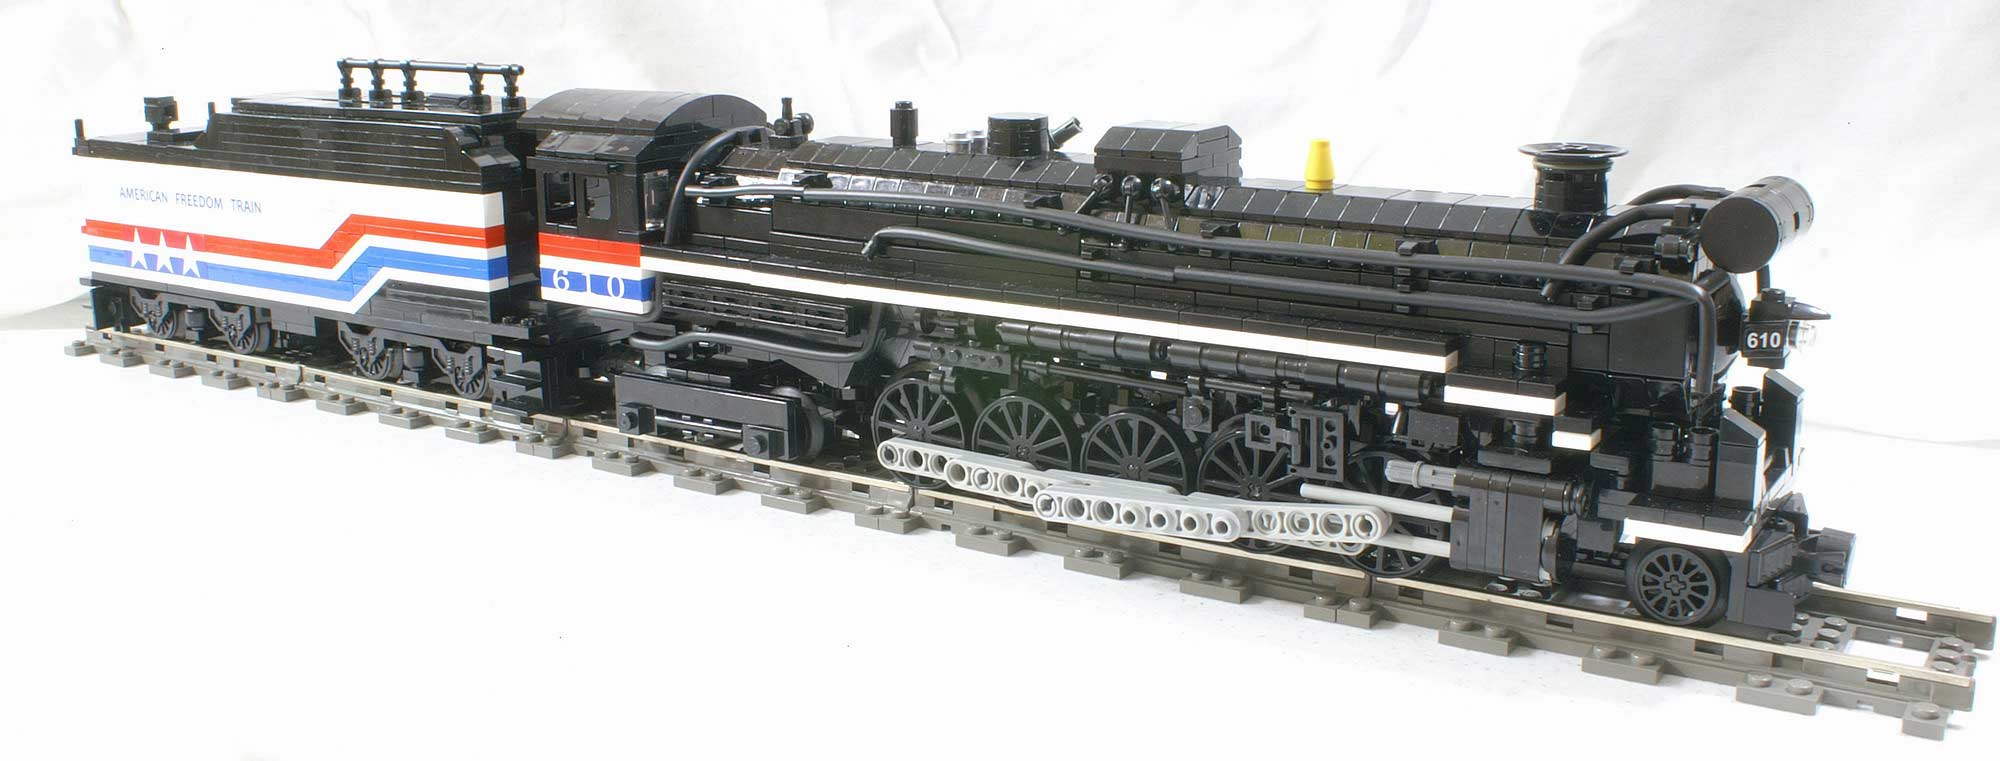 sava-american-freedom-train-lego-train-steam-locomotive-610-002-1200x 